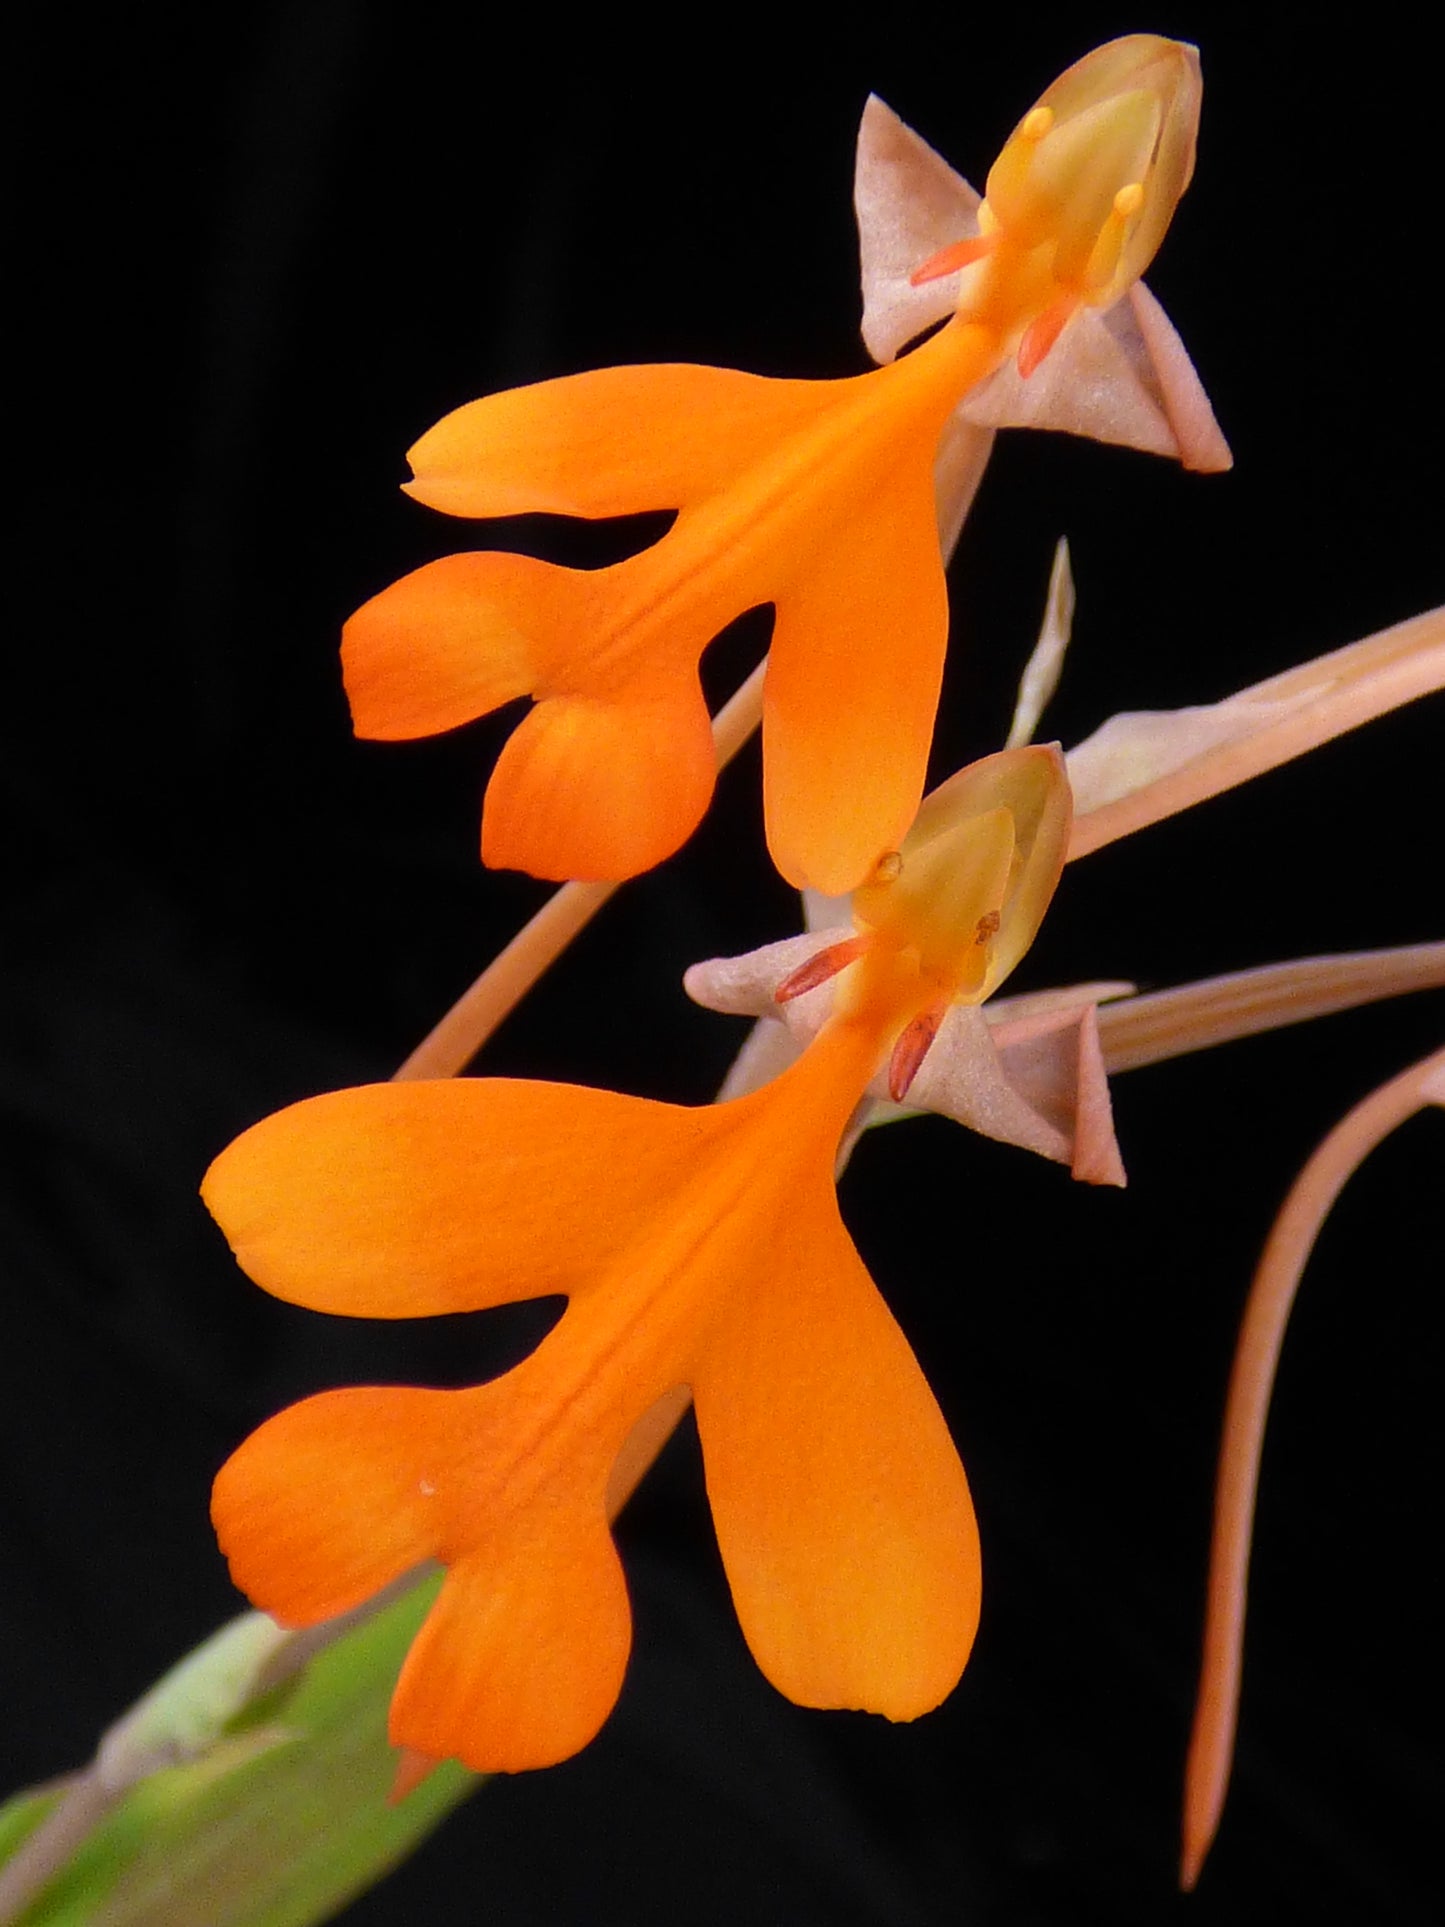 Habenaria rhodocheila - Blooming size tuber